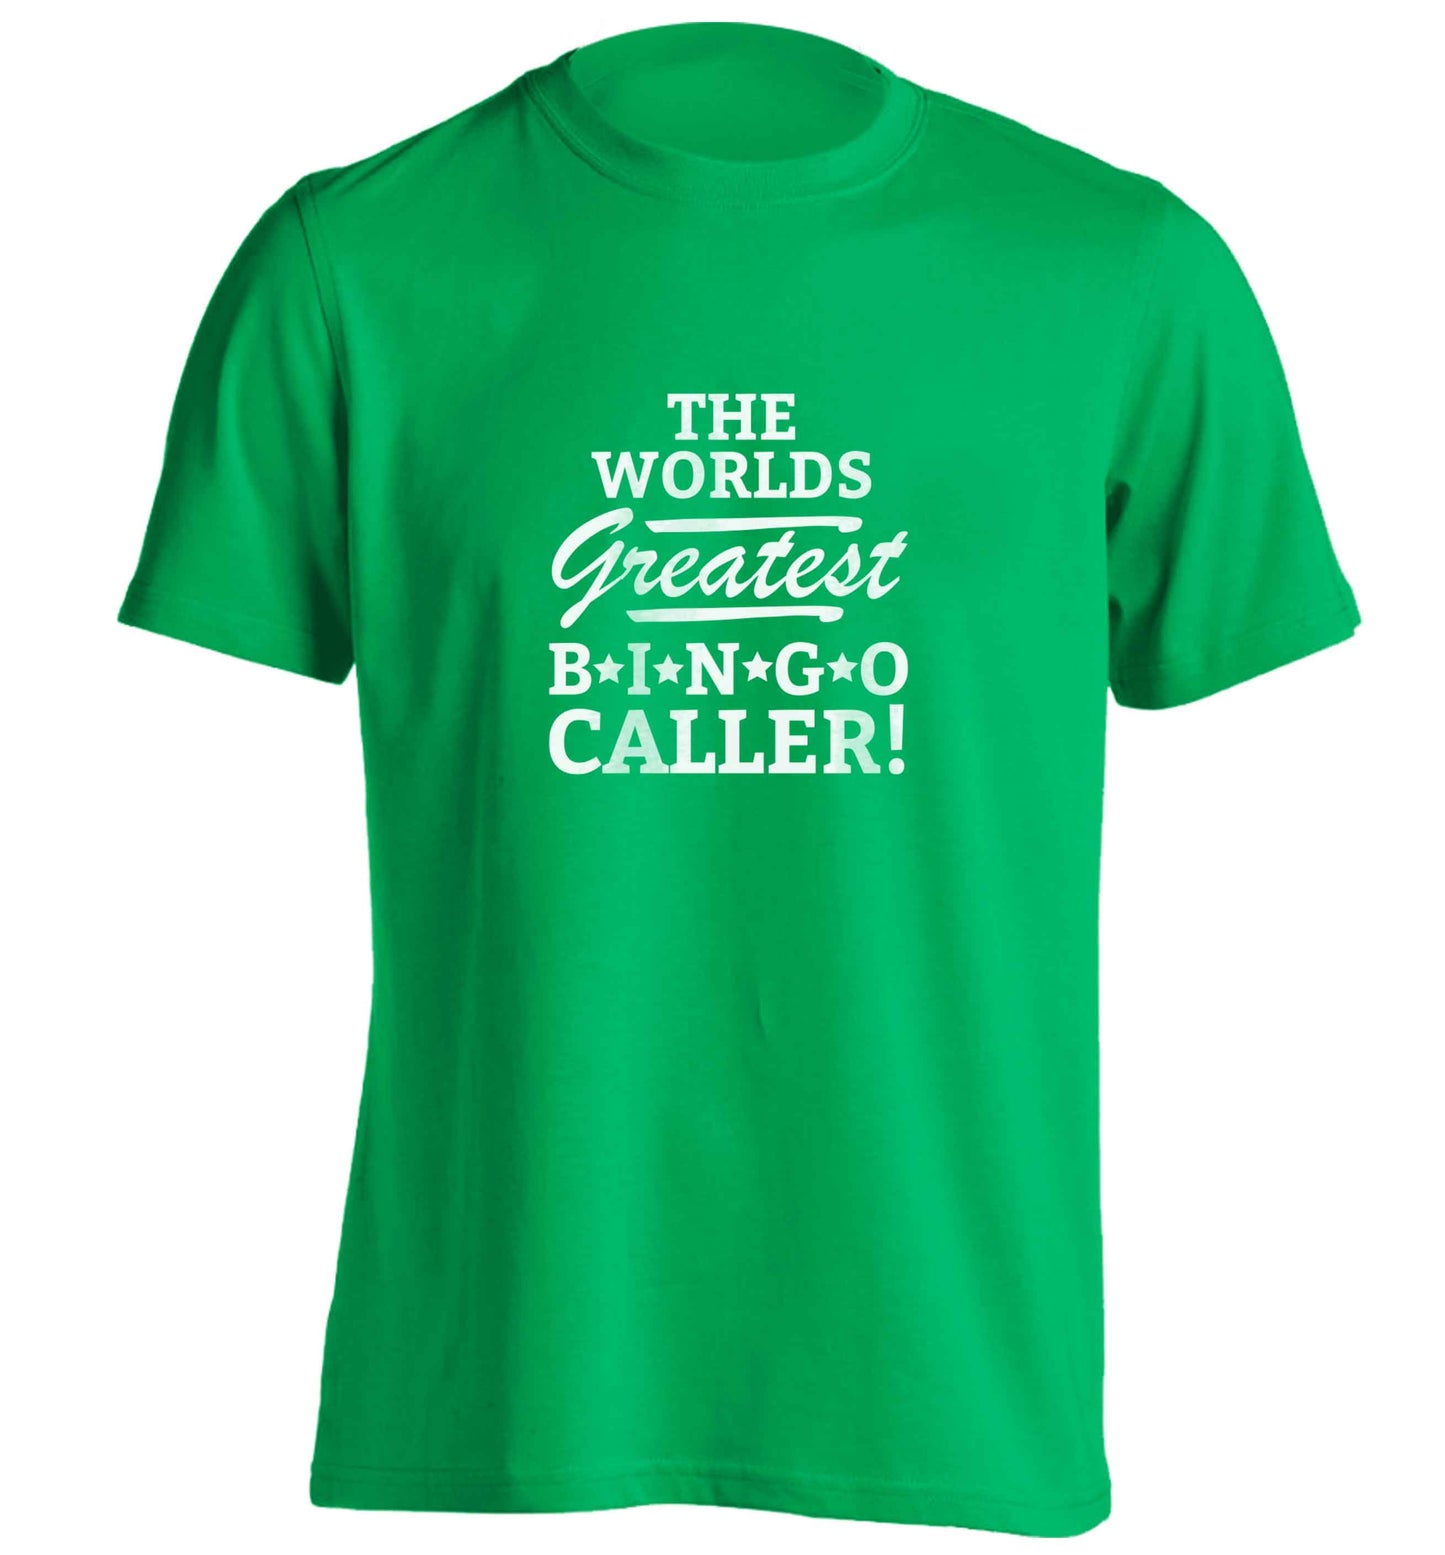 Worlds greatest bingo caller adults unisex green Tshirt 2XL